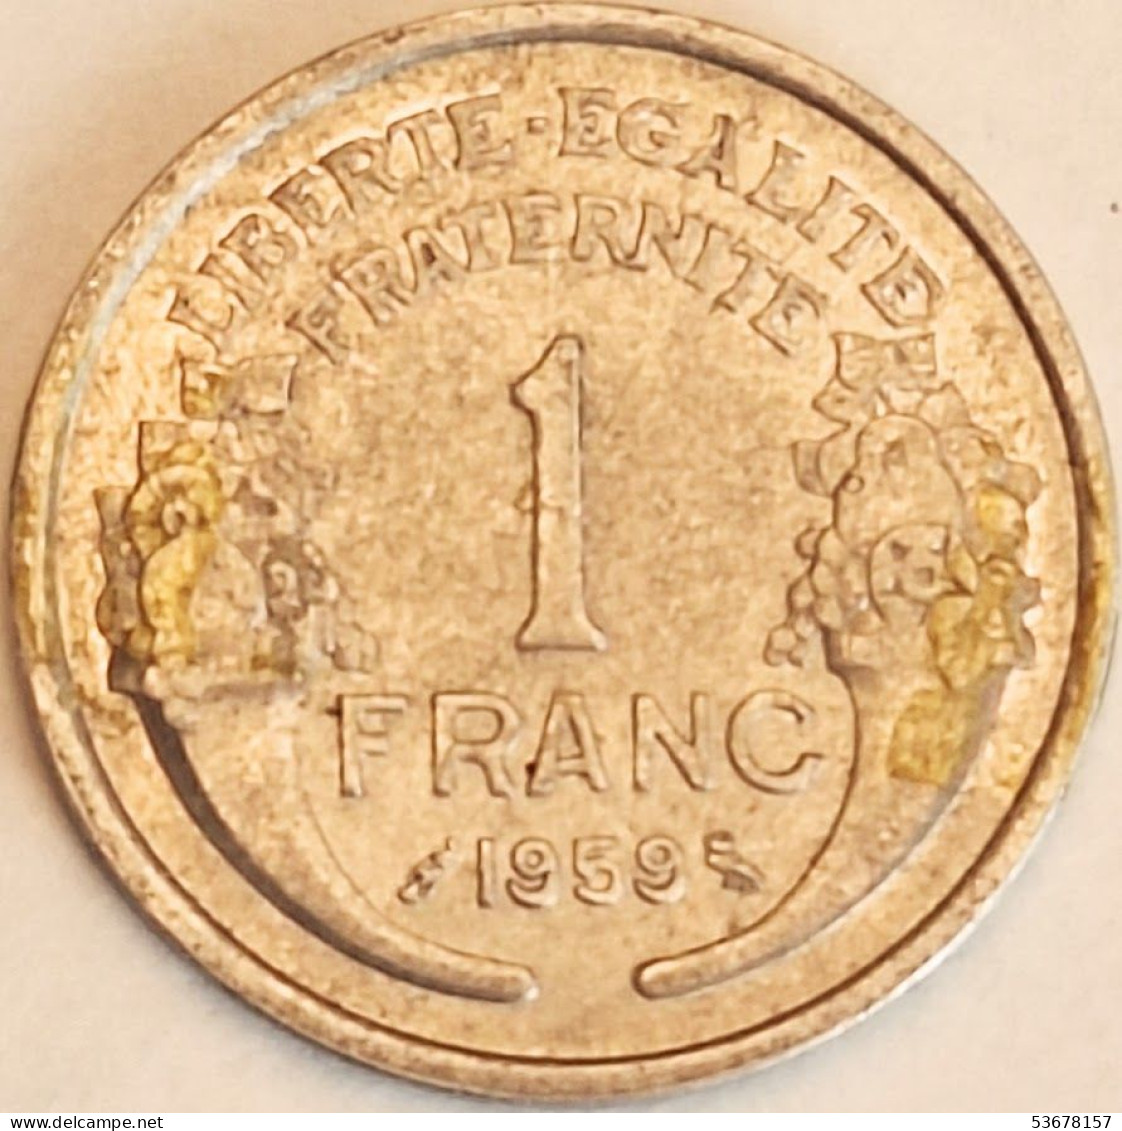 France - Franc 1959, KM# 885a.1 (#4089) - 1 Franc